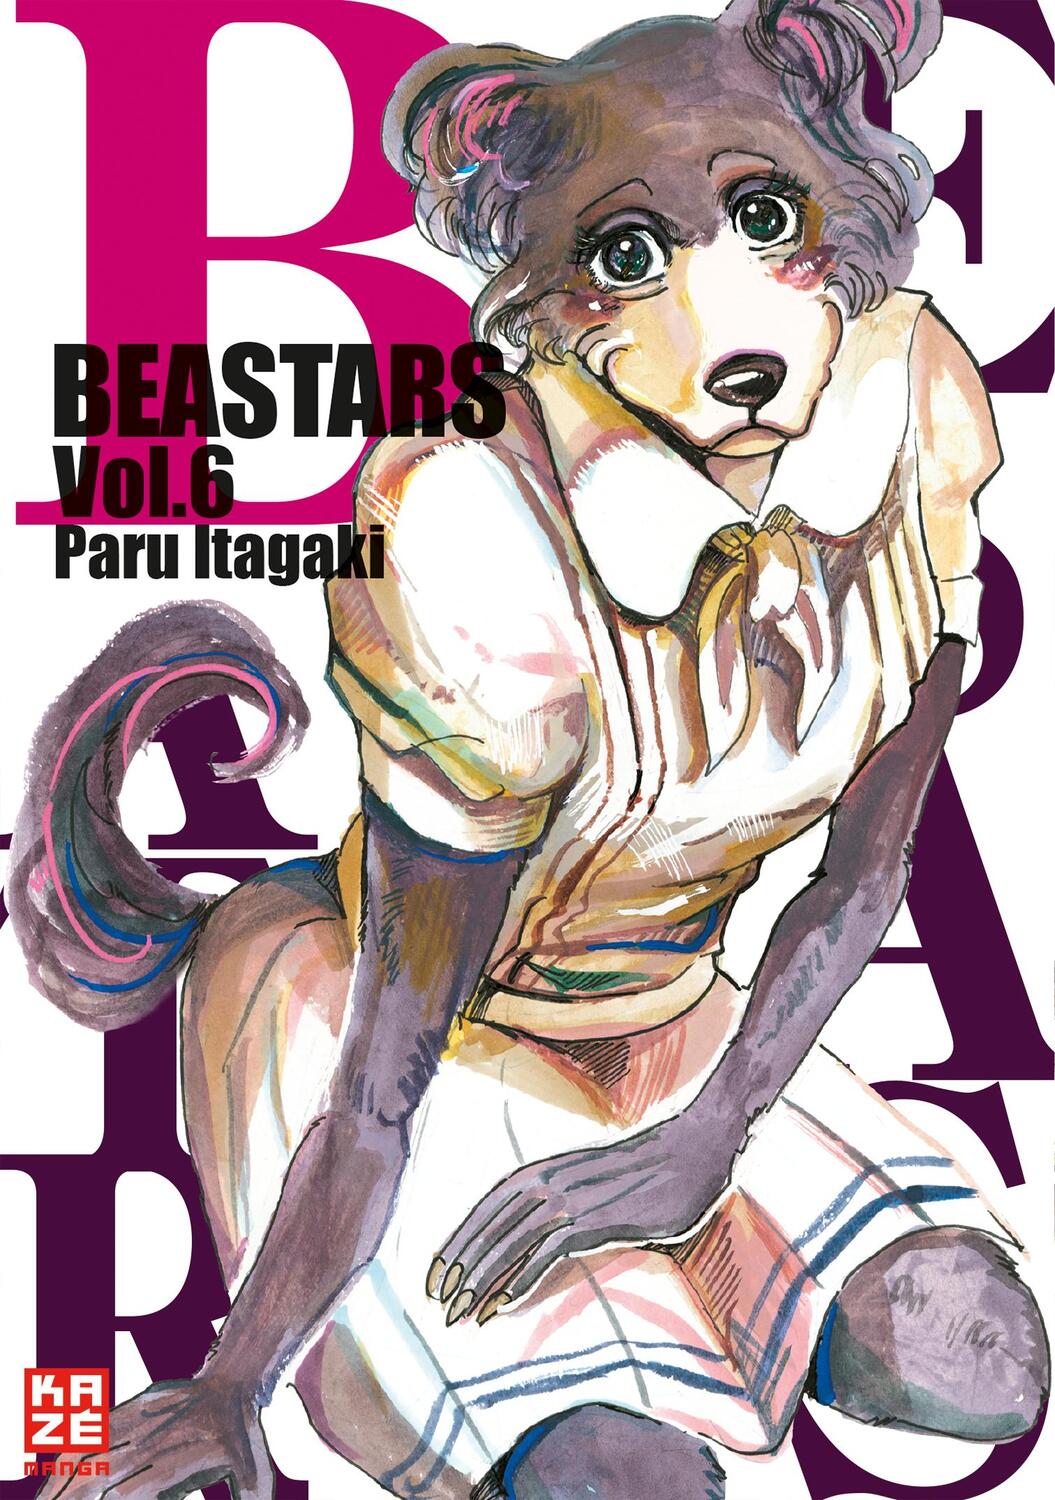 Beastars - Band 6 - Itagaki, Paru